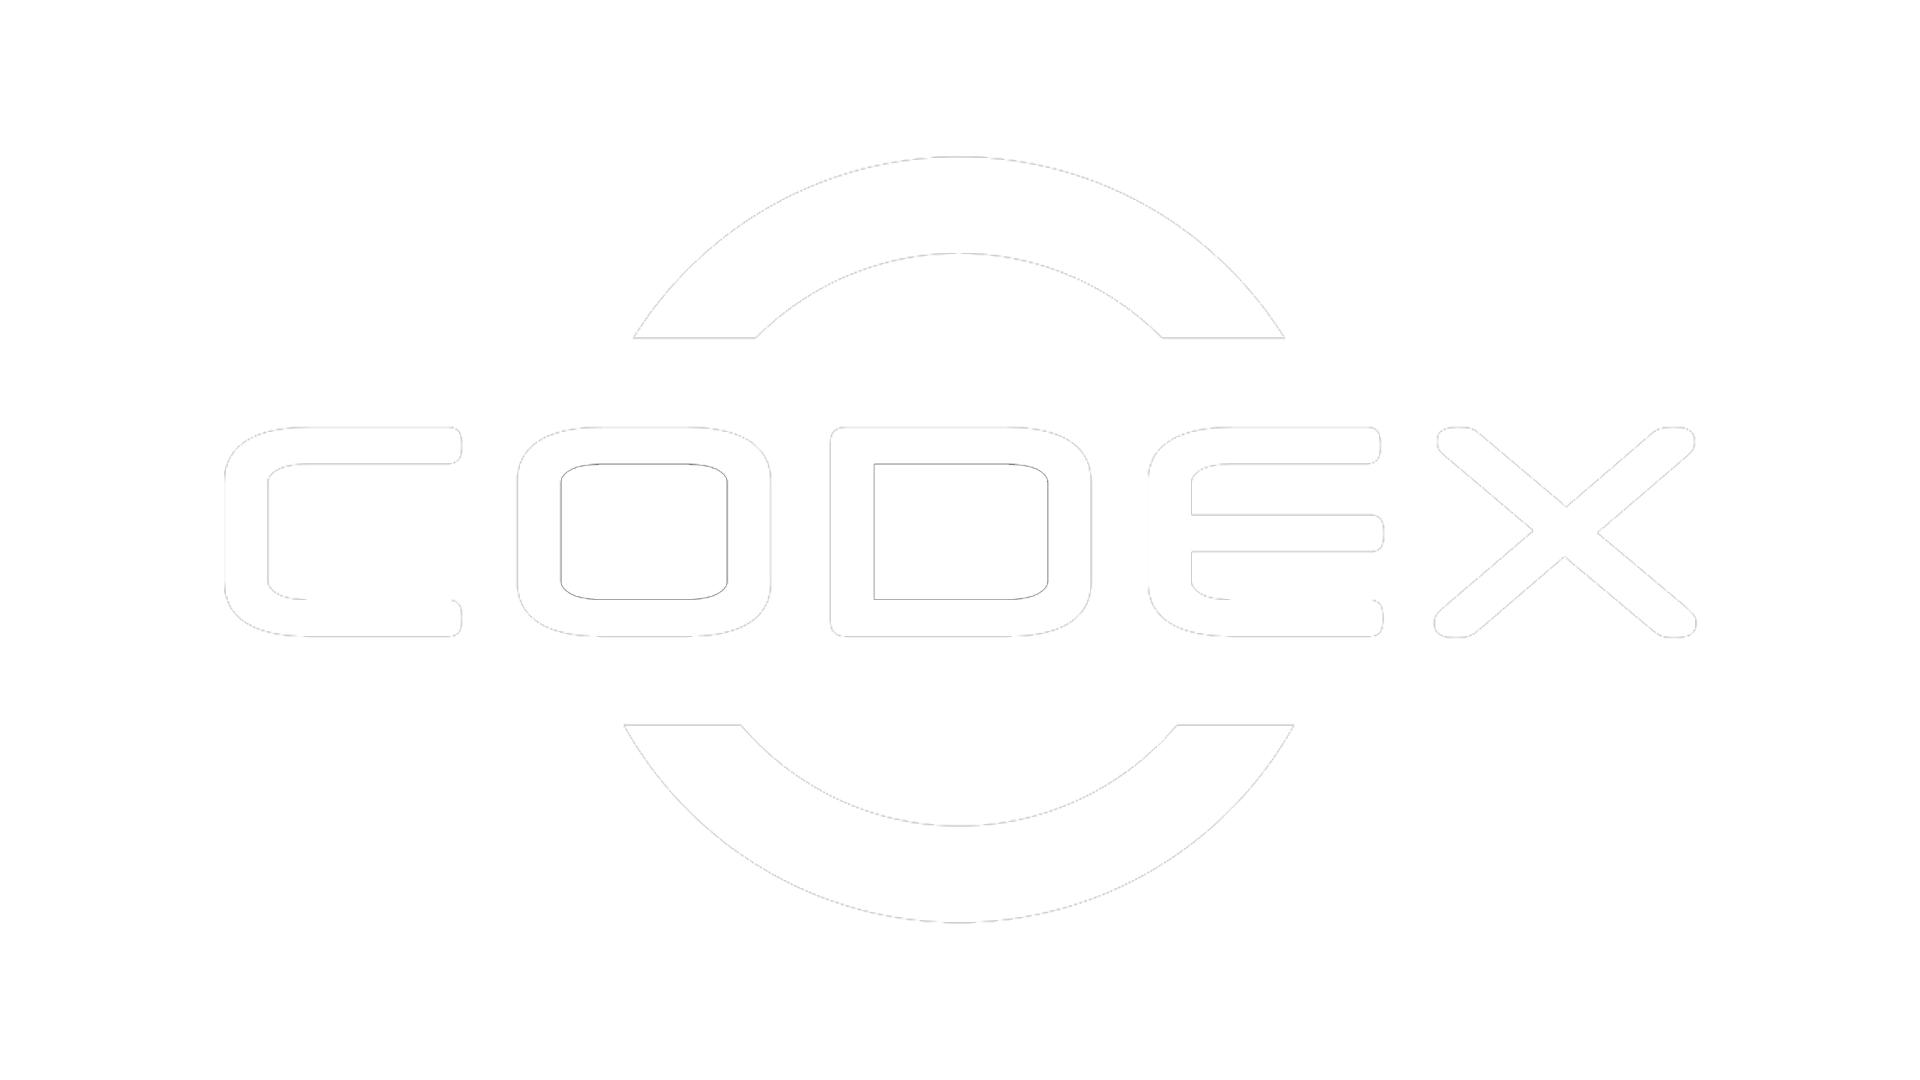 Codex Mechanical Components